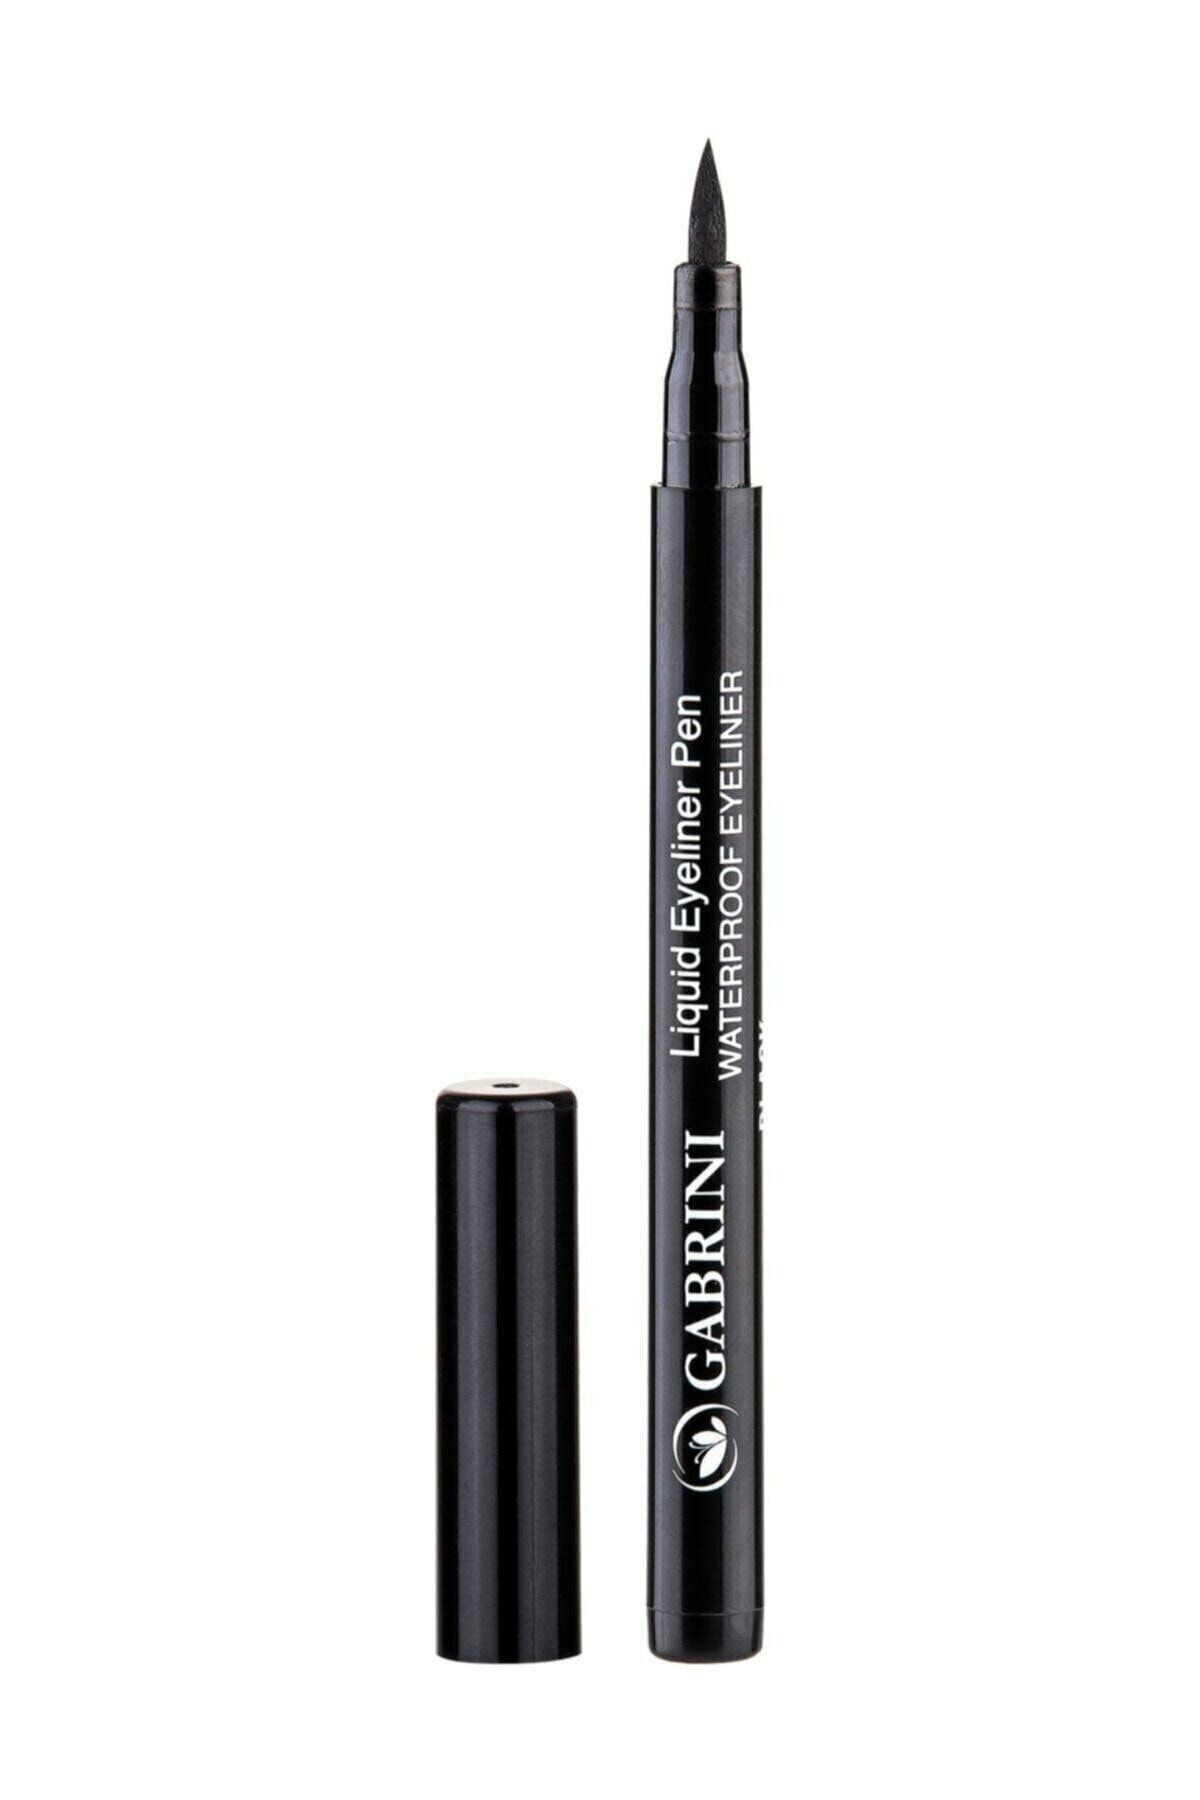 Gabrini Kalem Dipliner Black Waterproof Liquid Eyeliner Pen X 1 Adet